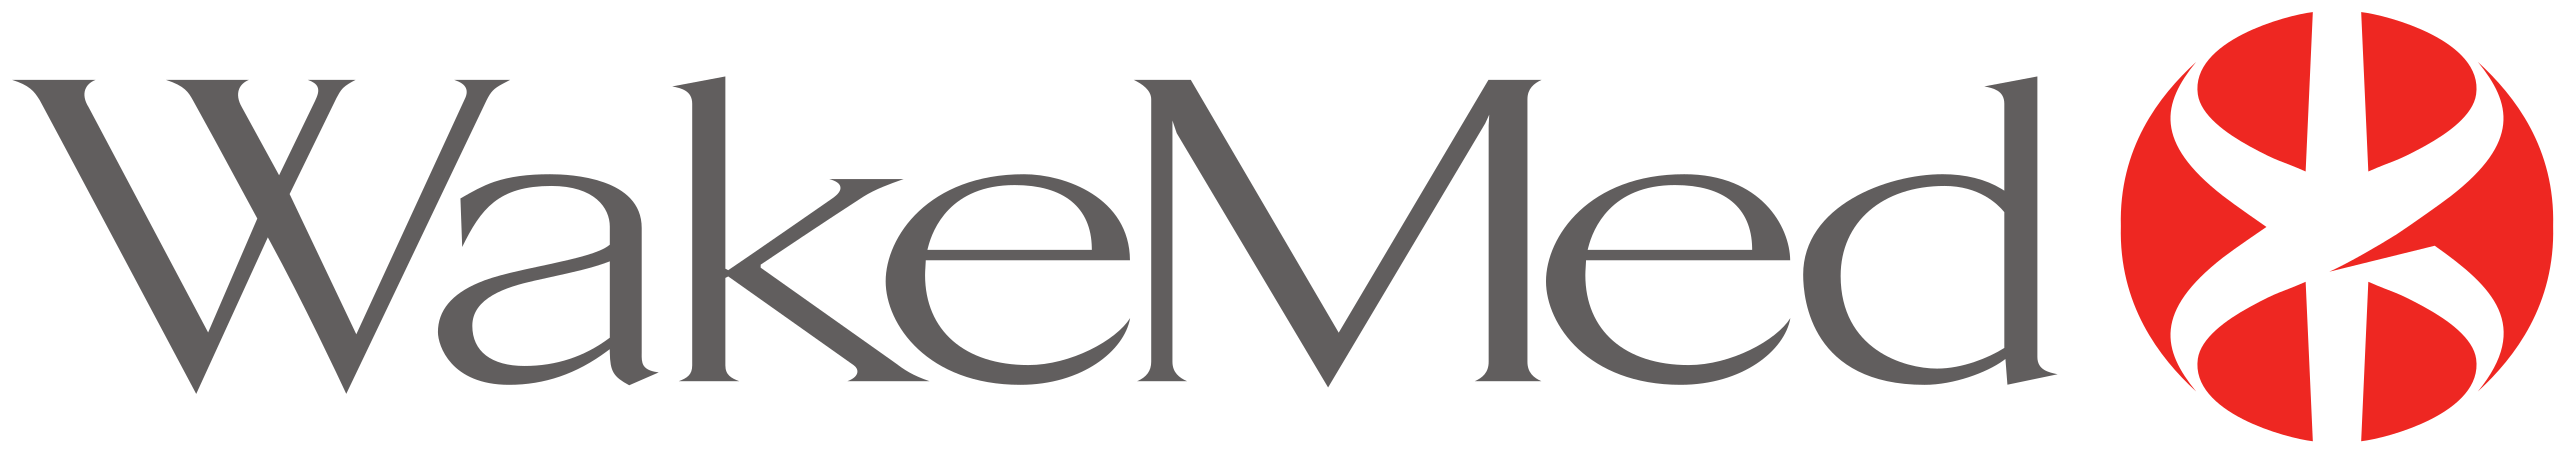 WakeMed logo